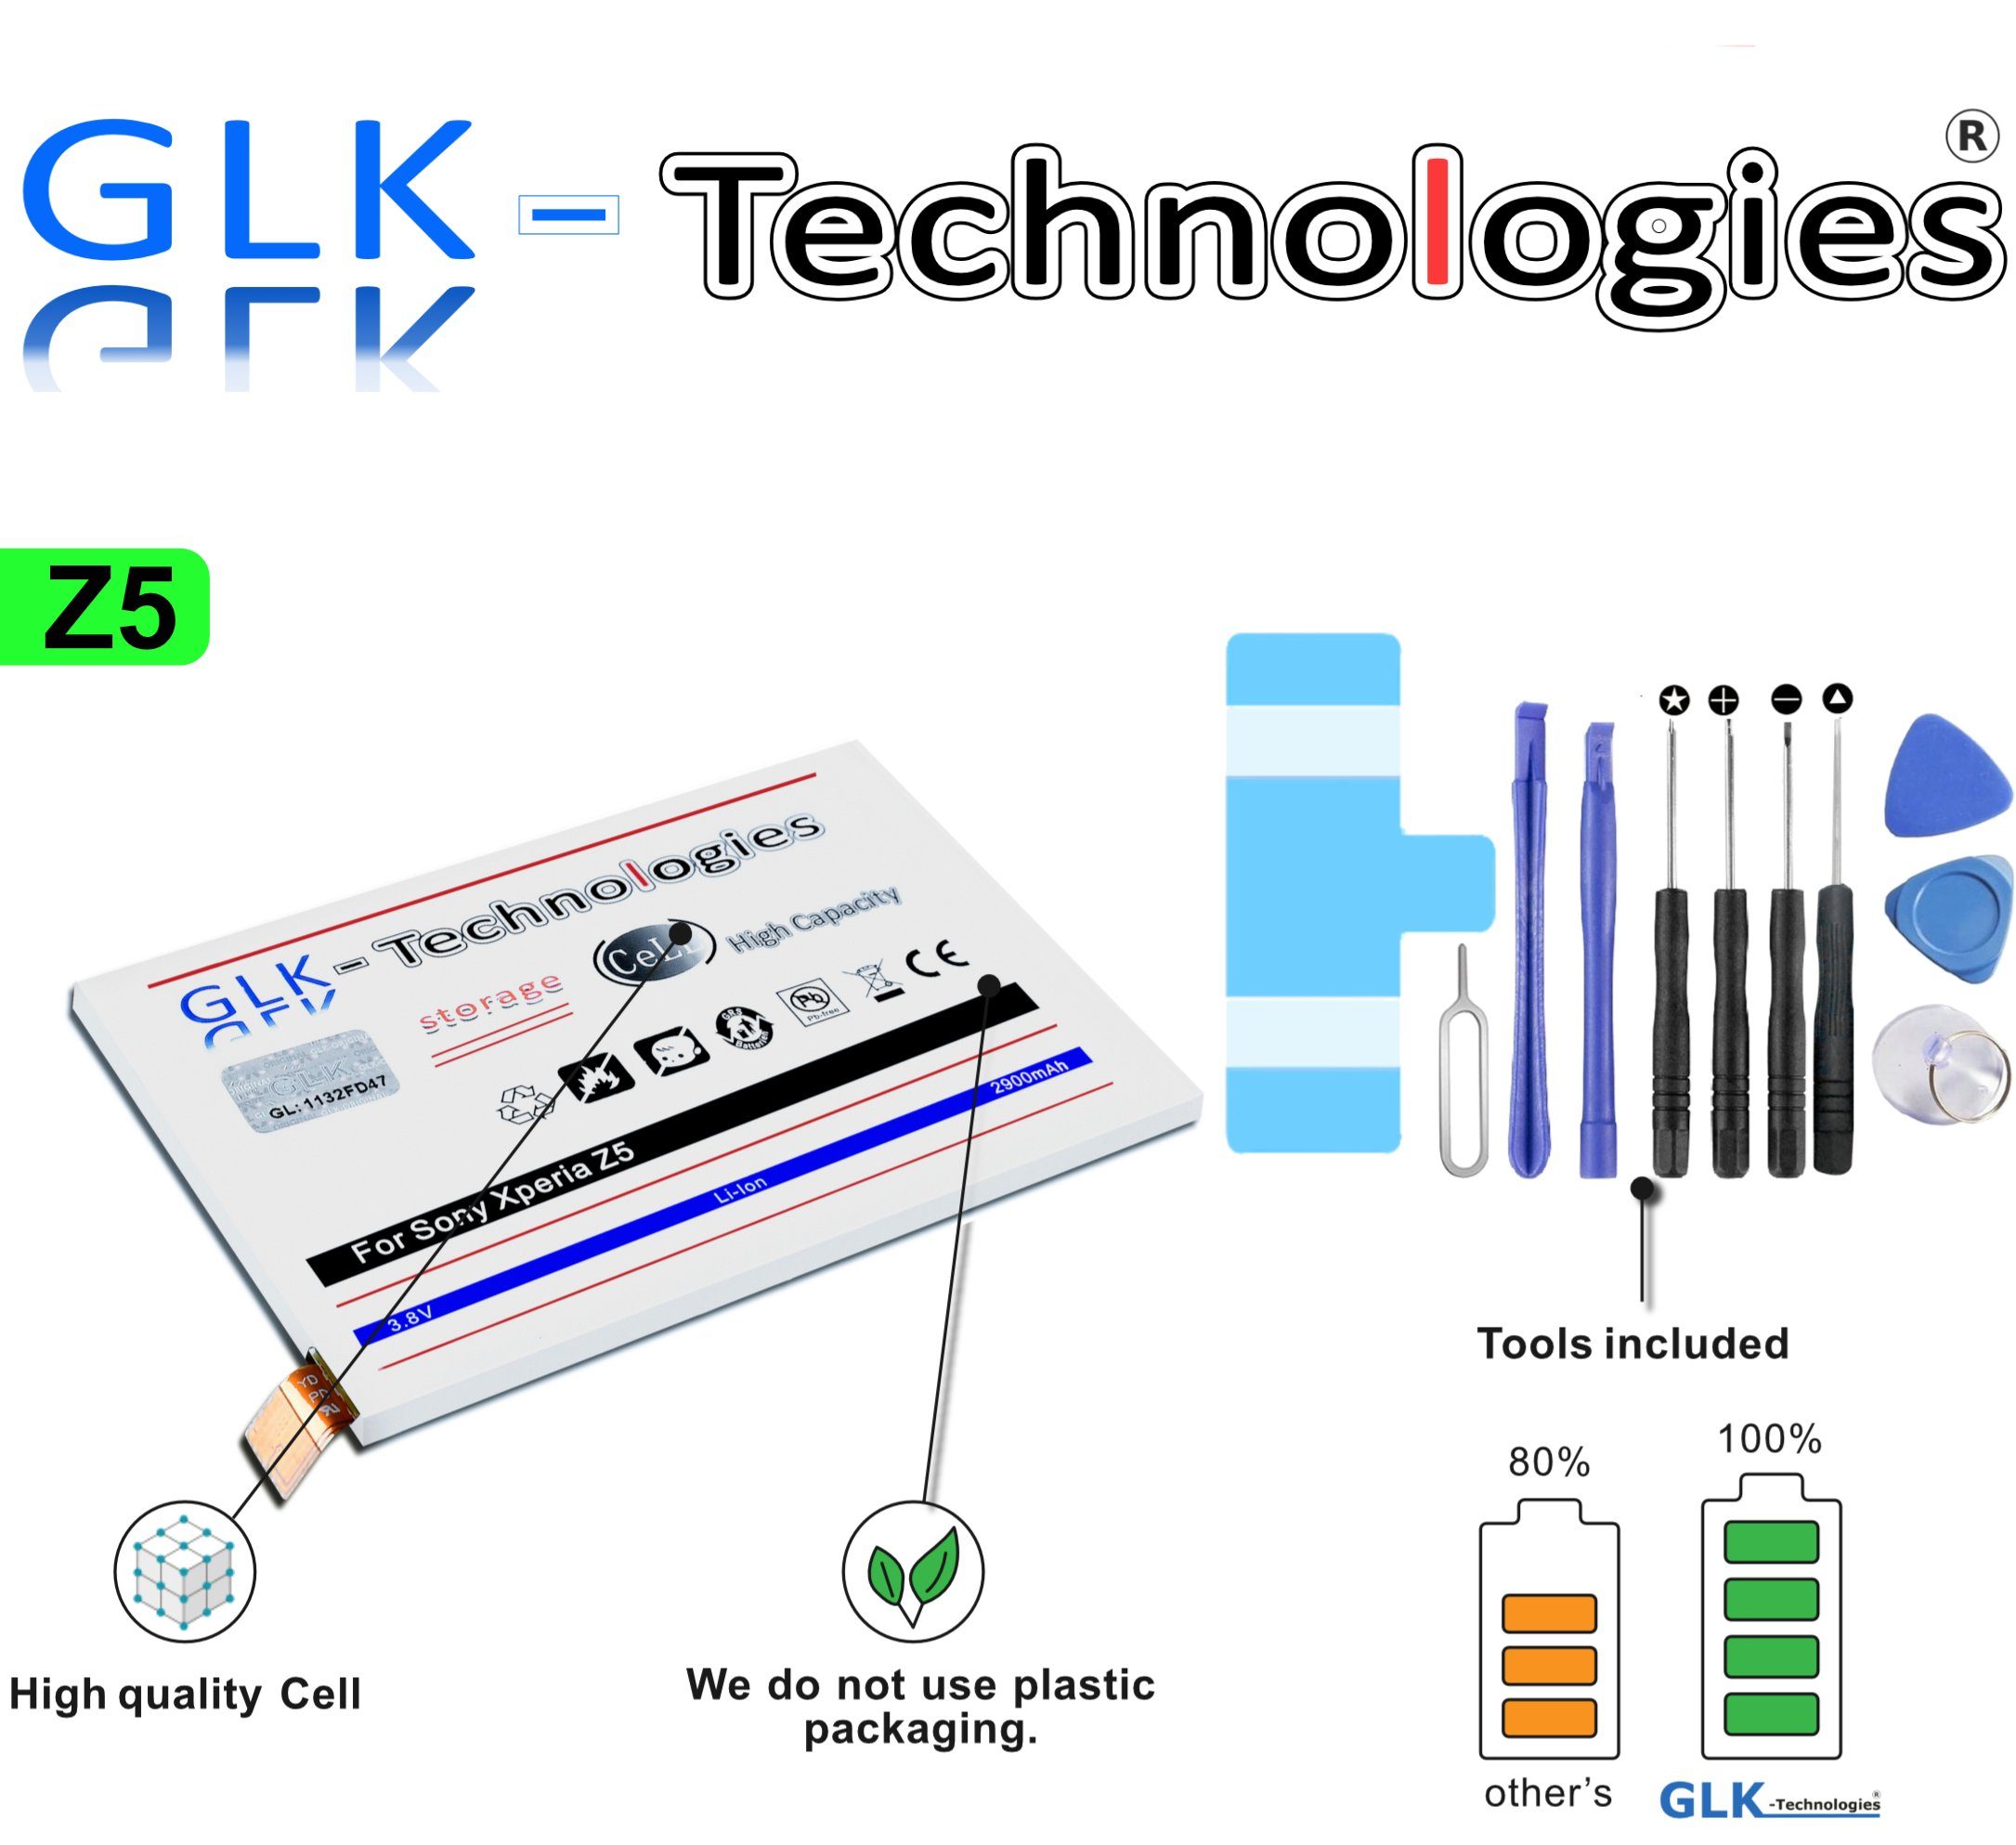 Power mAh kompatibel Akku GLK-Technologies® GLK-Technologies Battery, LIS1593ERPC, High // Z5 mit Smartphone-Akku (3.8 NEU Original Sony inkl Werkzeugset mAh, 2900 V) Xperia 2900